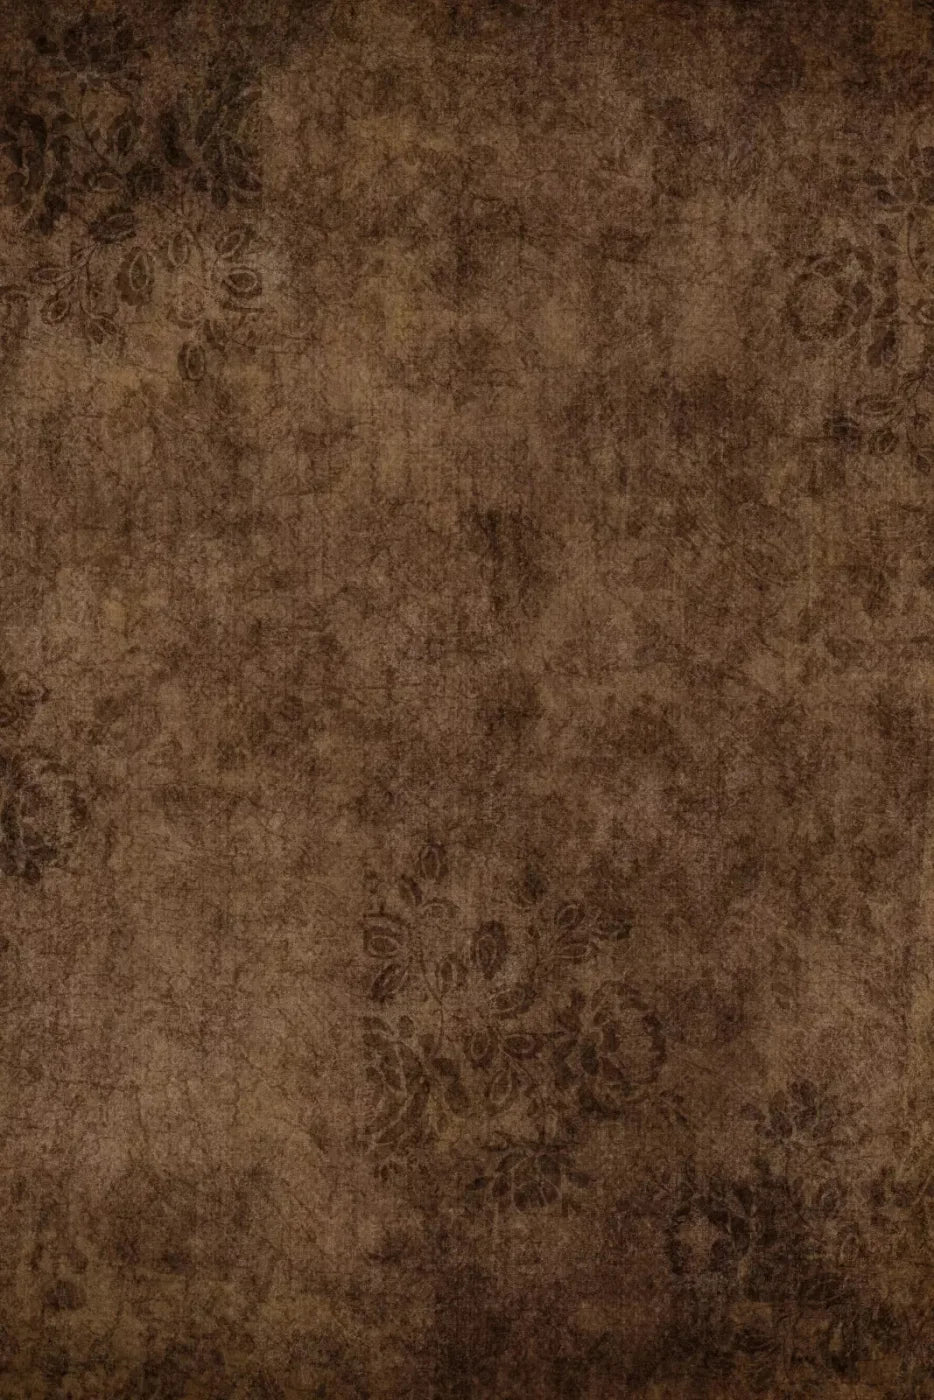 Brownie Dark 4X5 Rubbermat Floor ( 48 X 60 Inch ) Backdrop